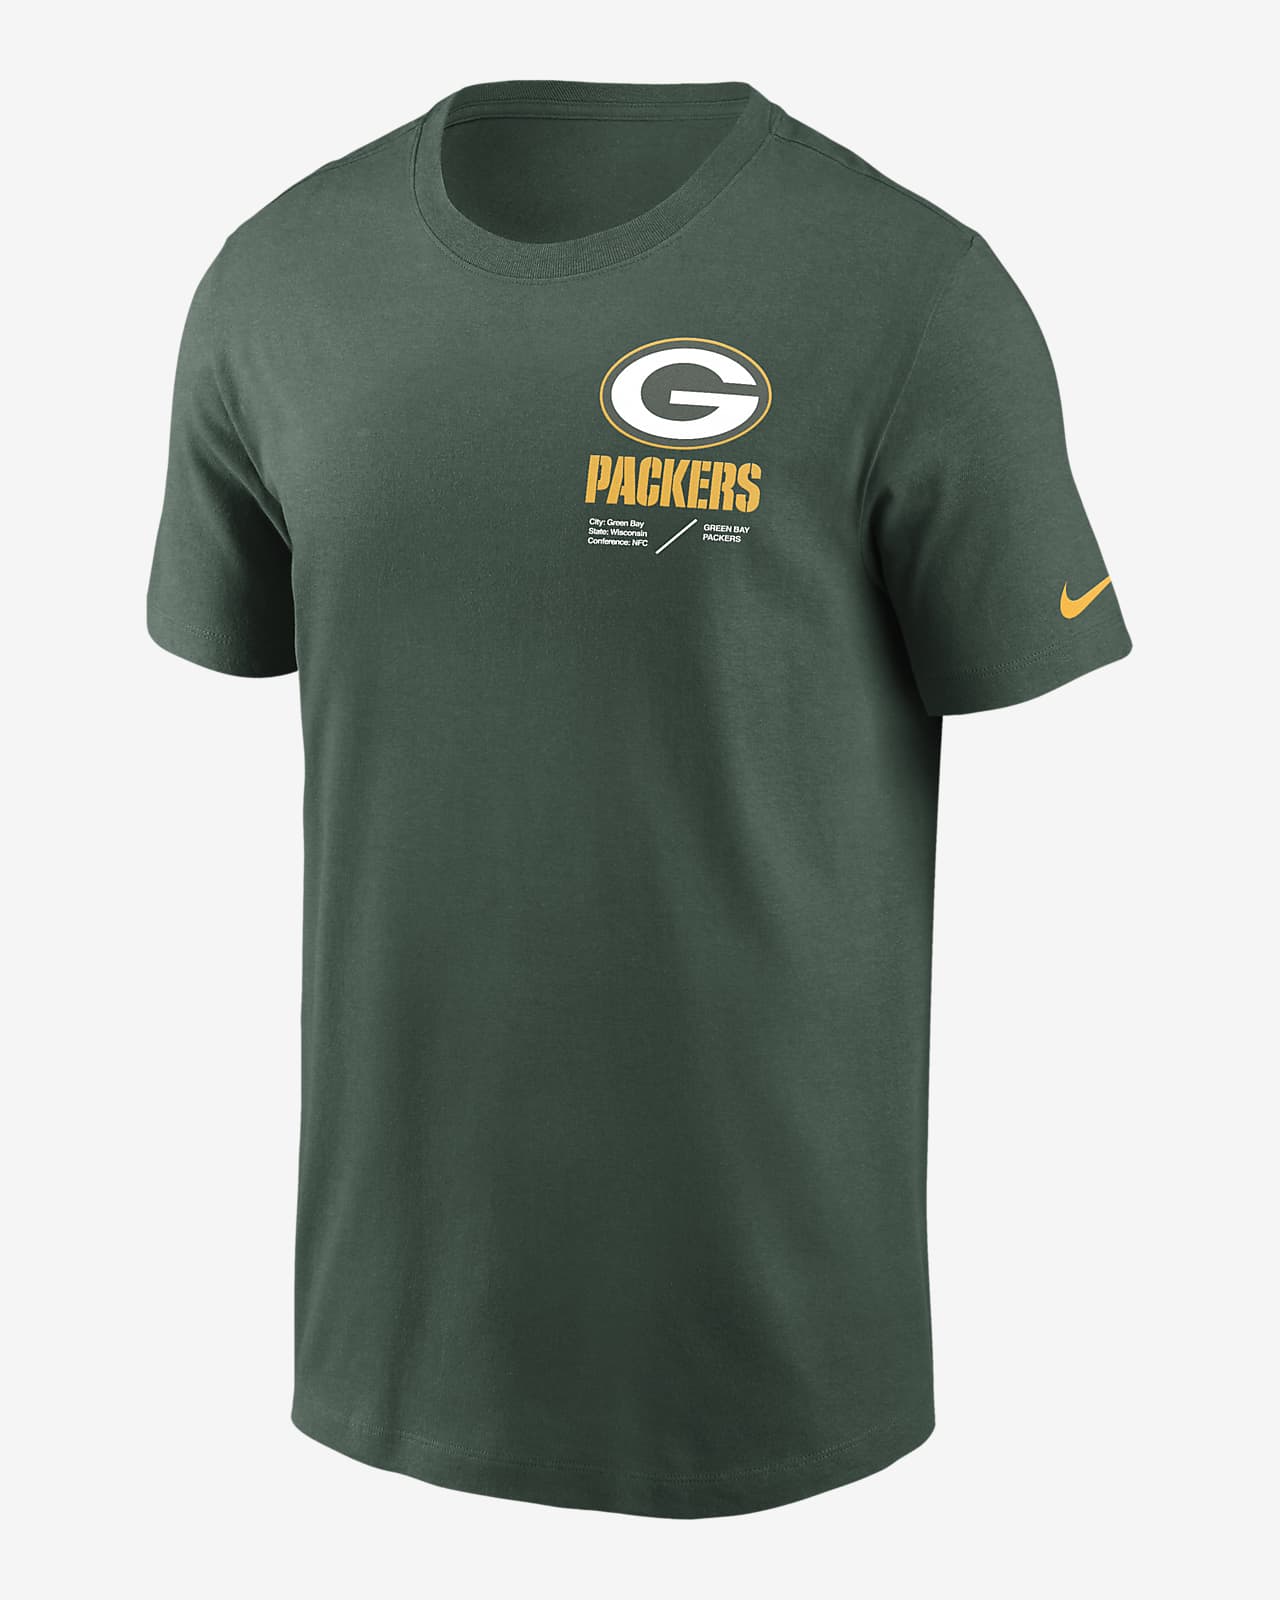 Nike Dri-FIT Lockup Team Issue (NFL Green Bay Packers) Men's T-Shirt ...